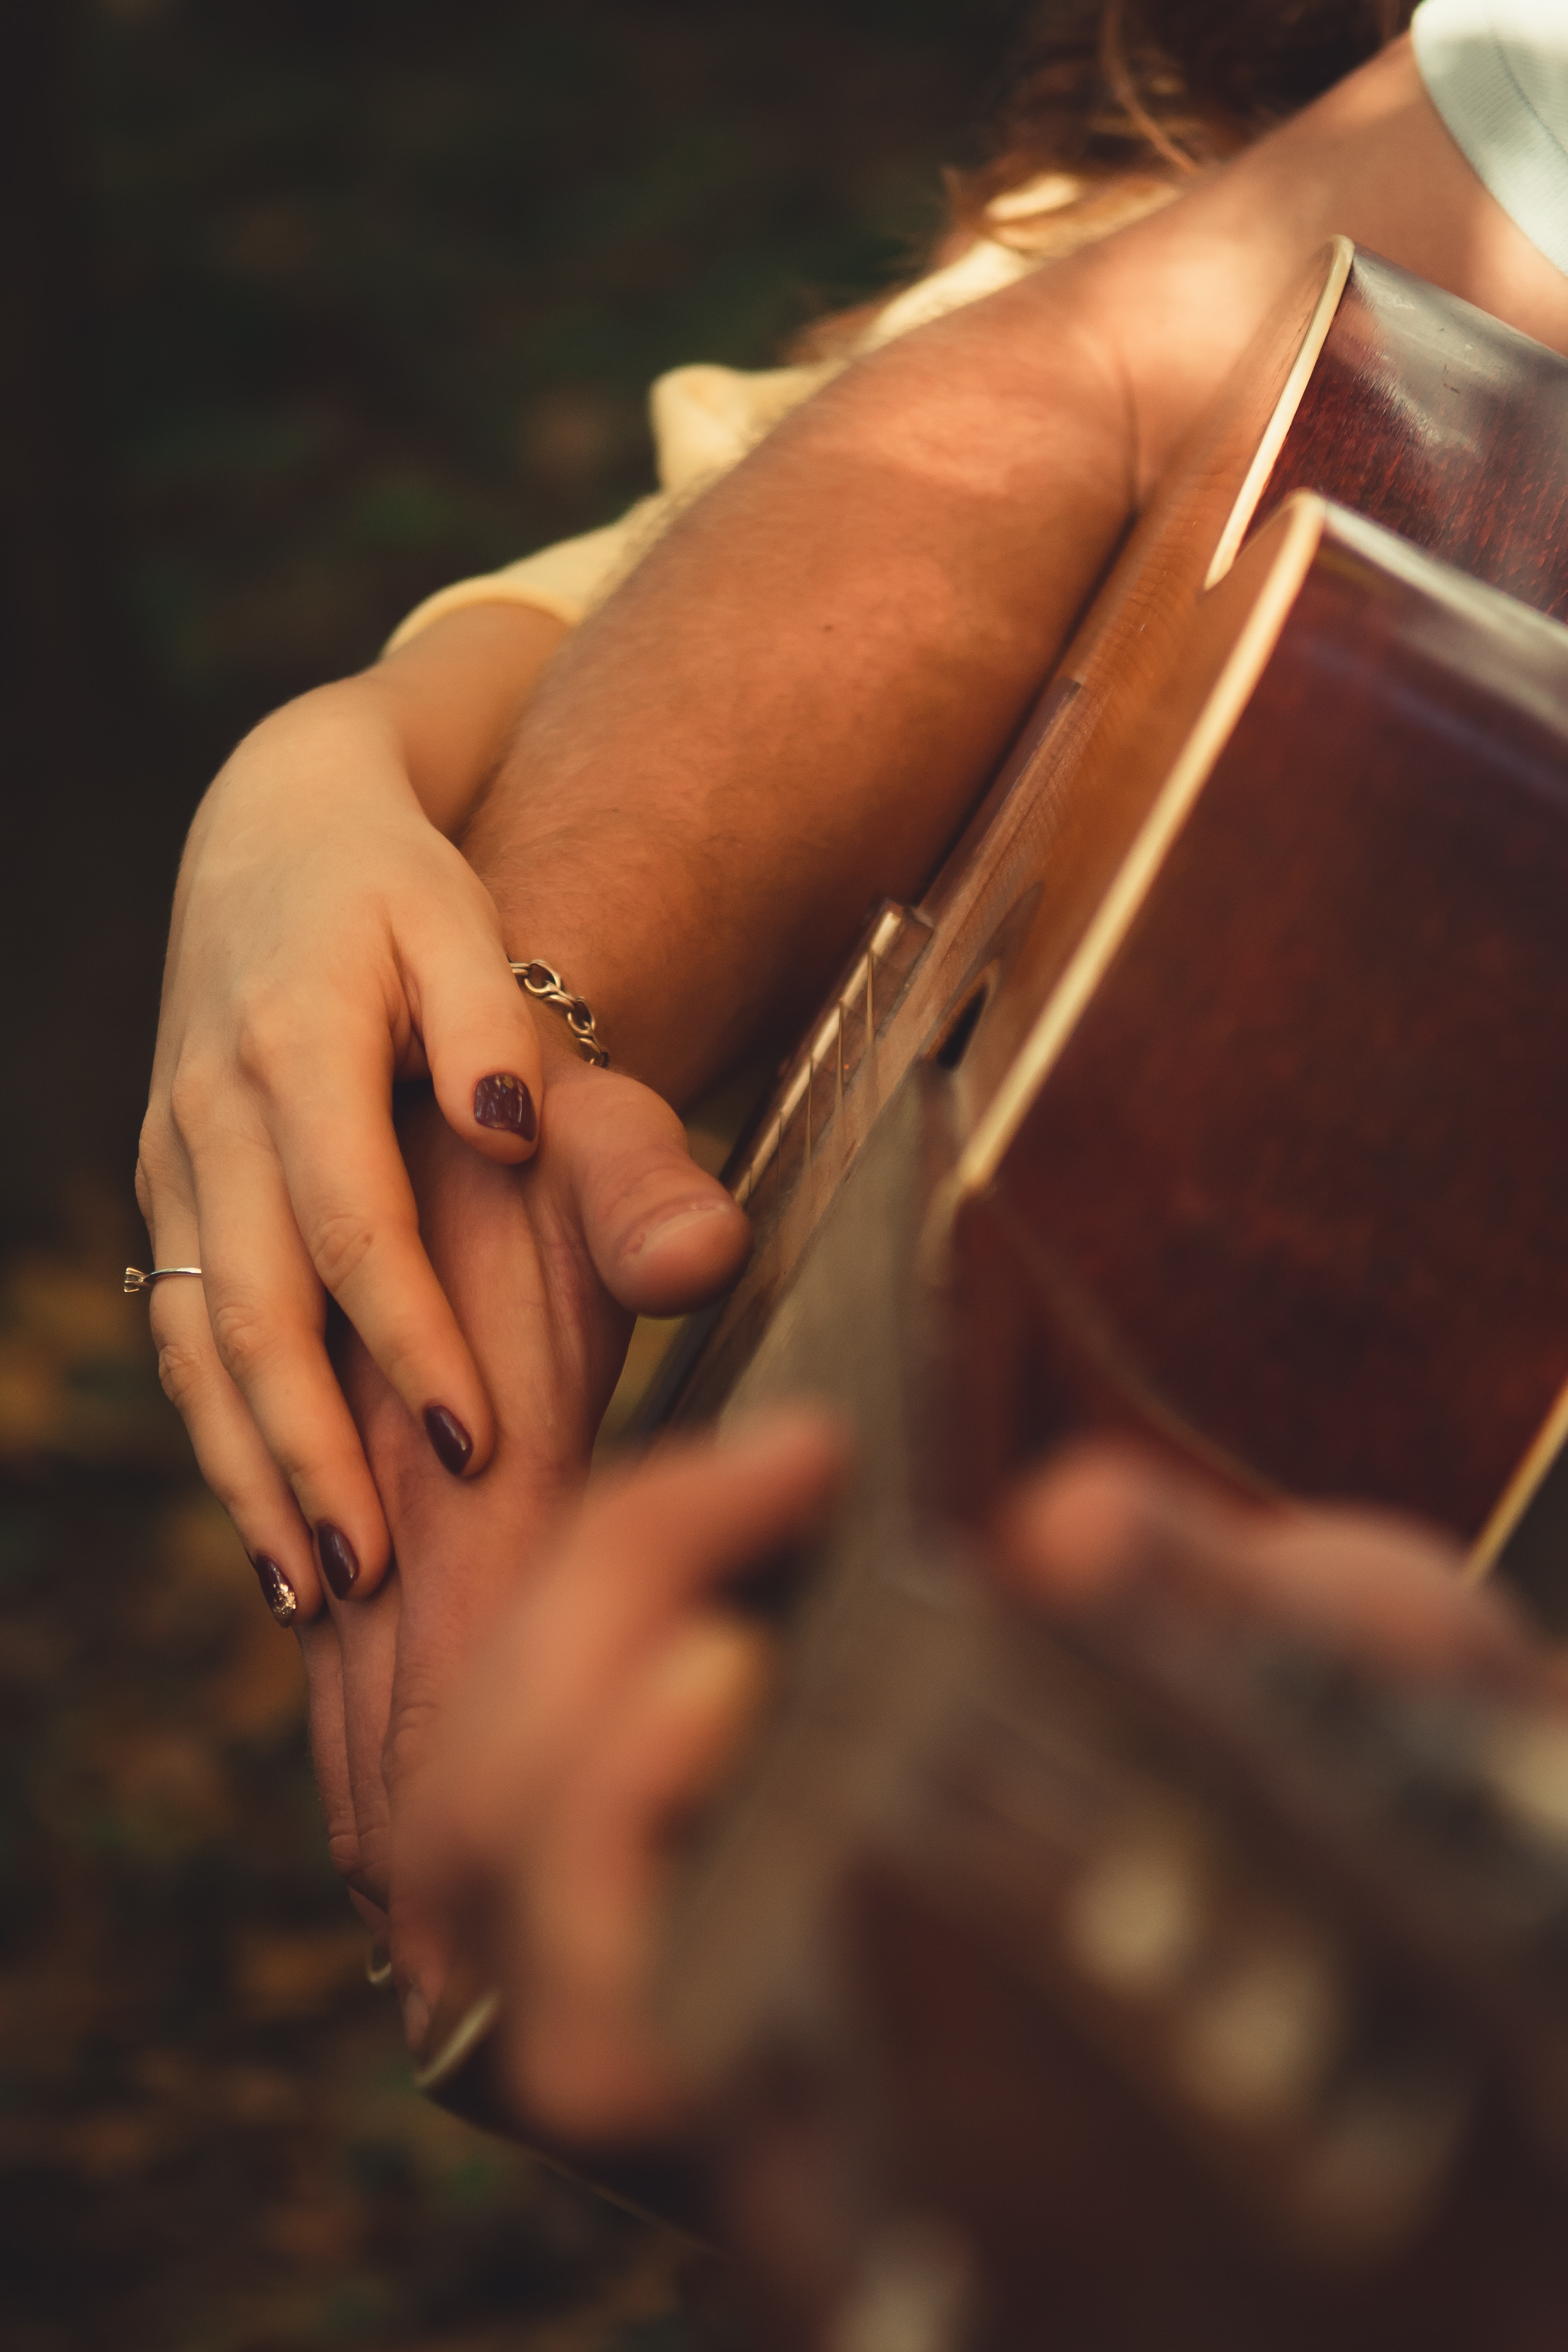 guitar, love, hands, romance, touching, touch